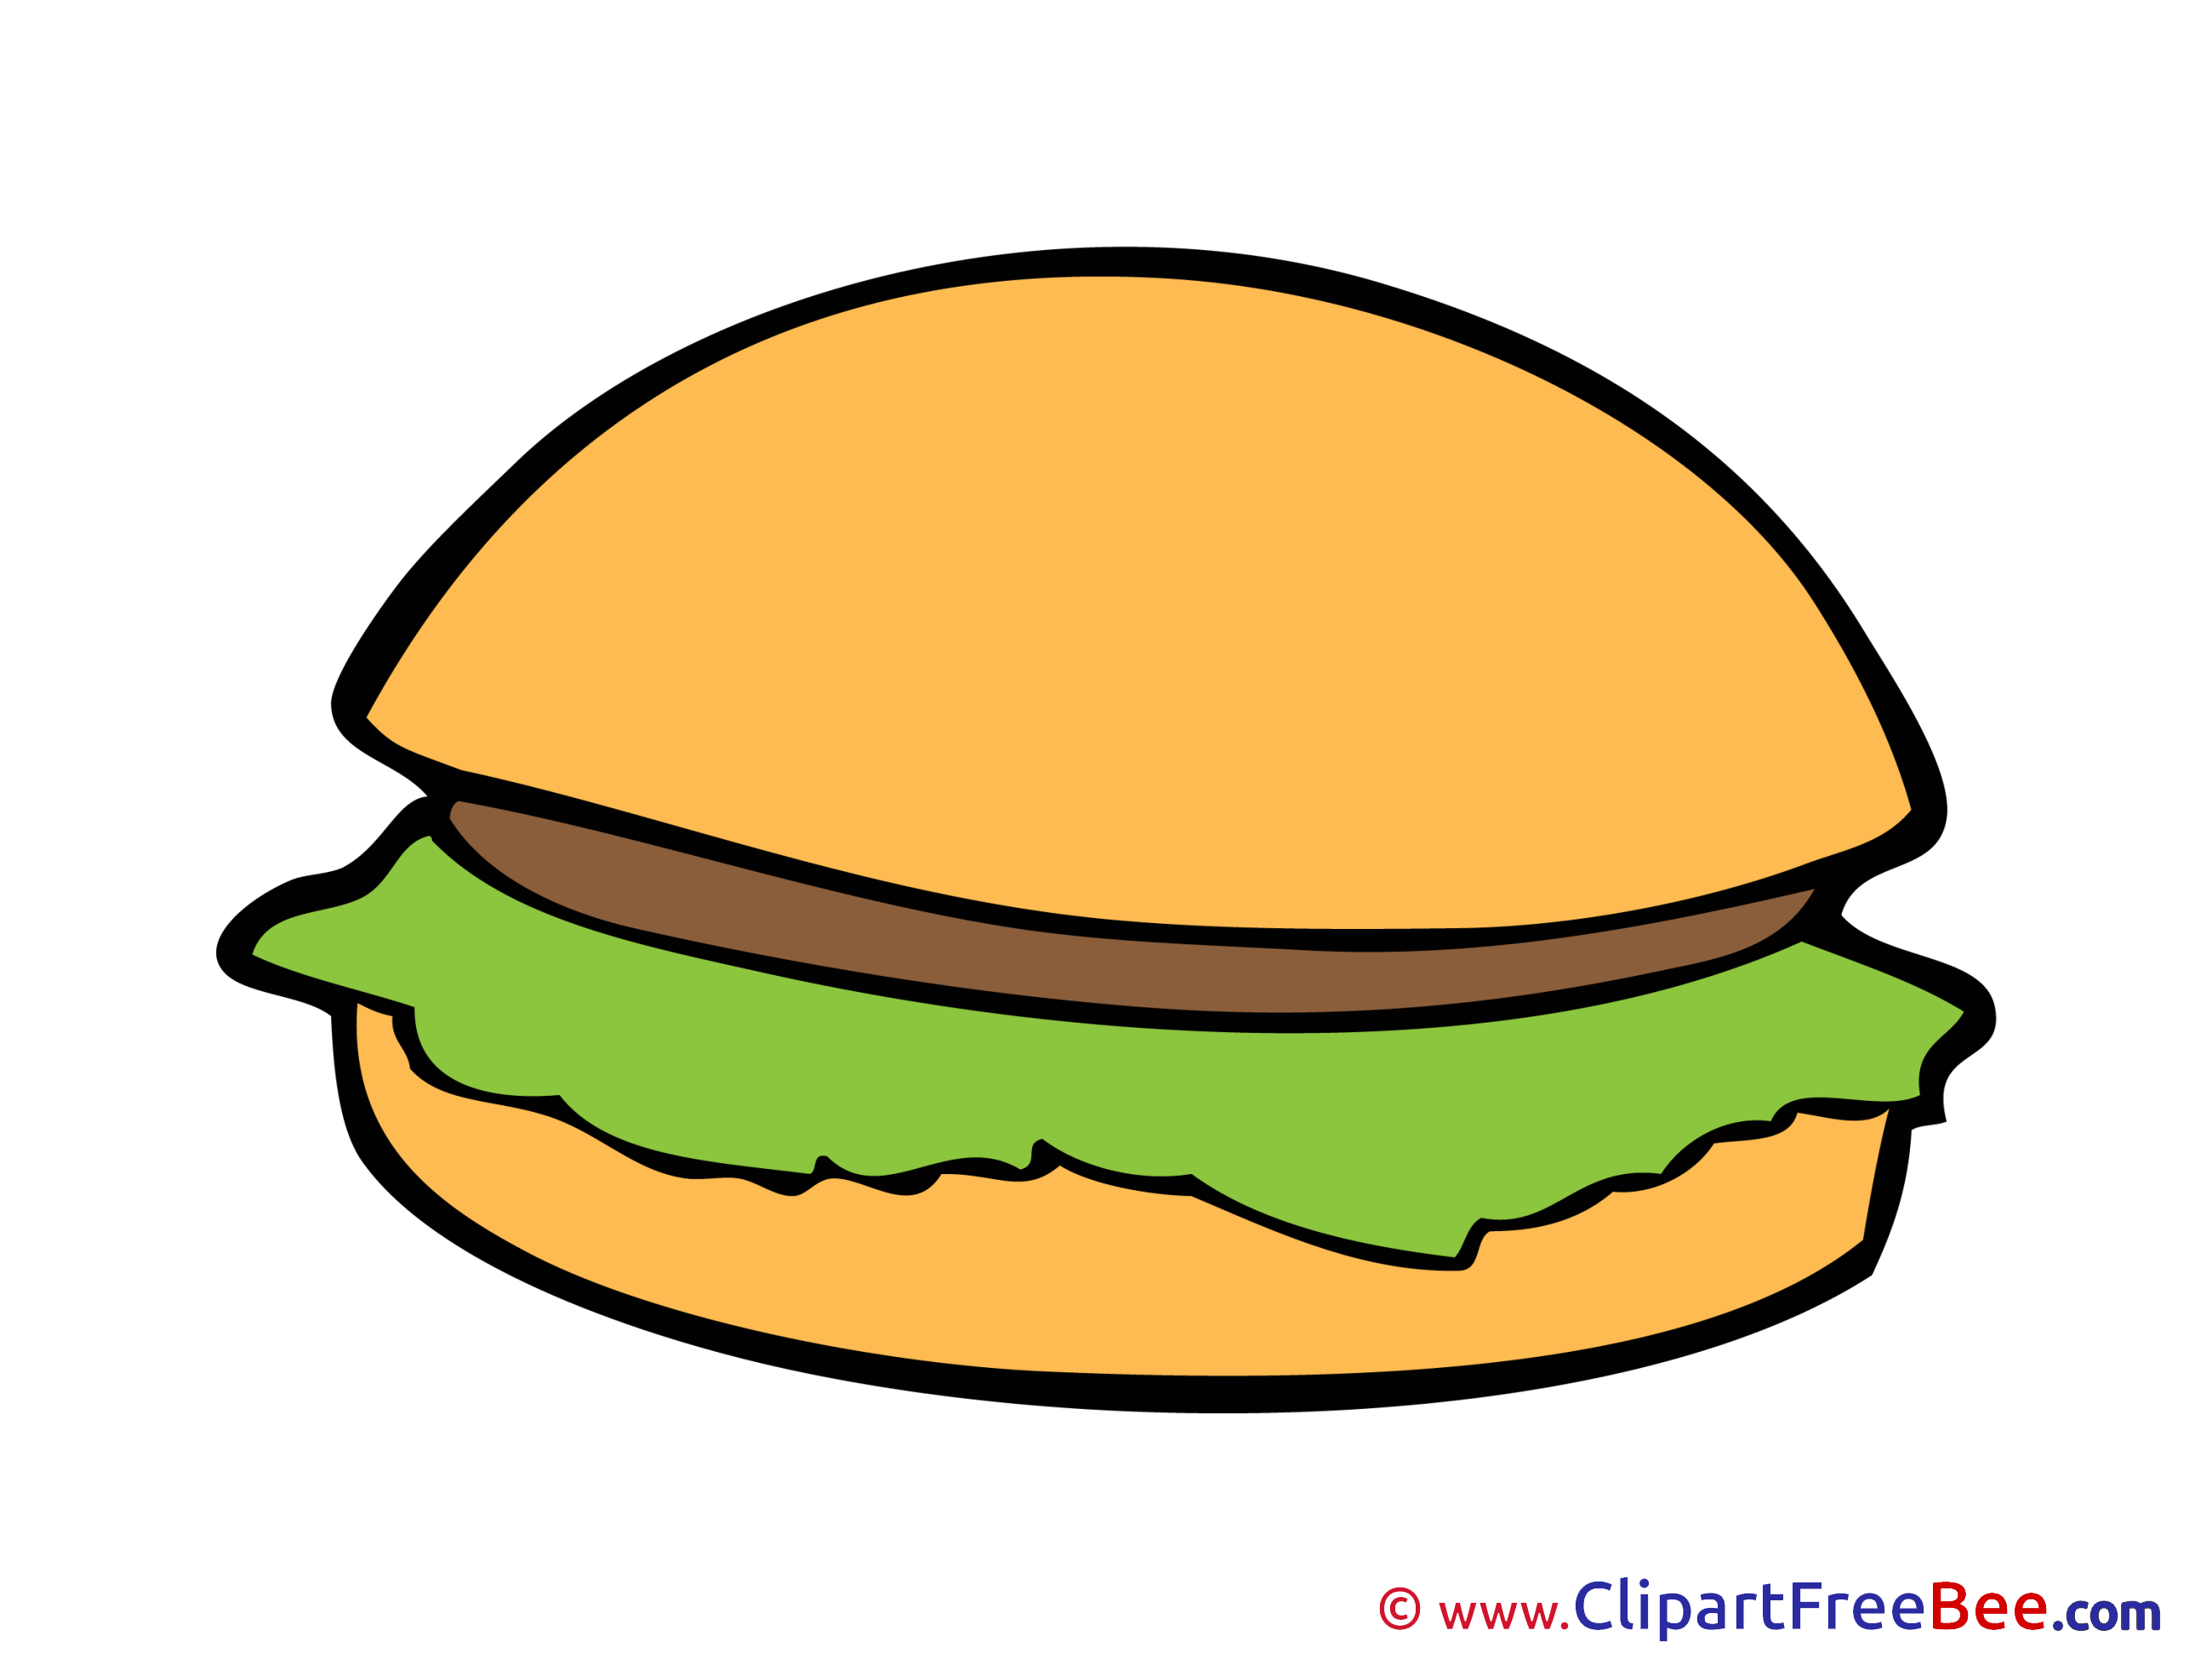 Hamburger free Cliparts for download